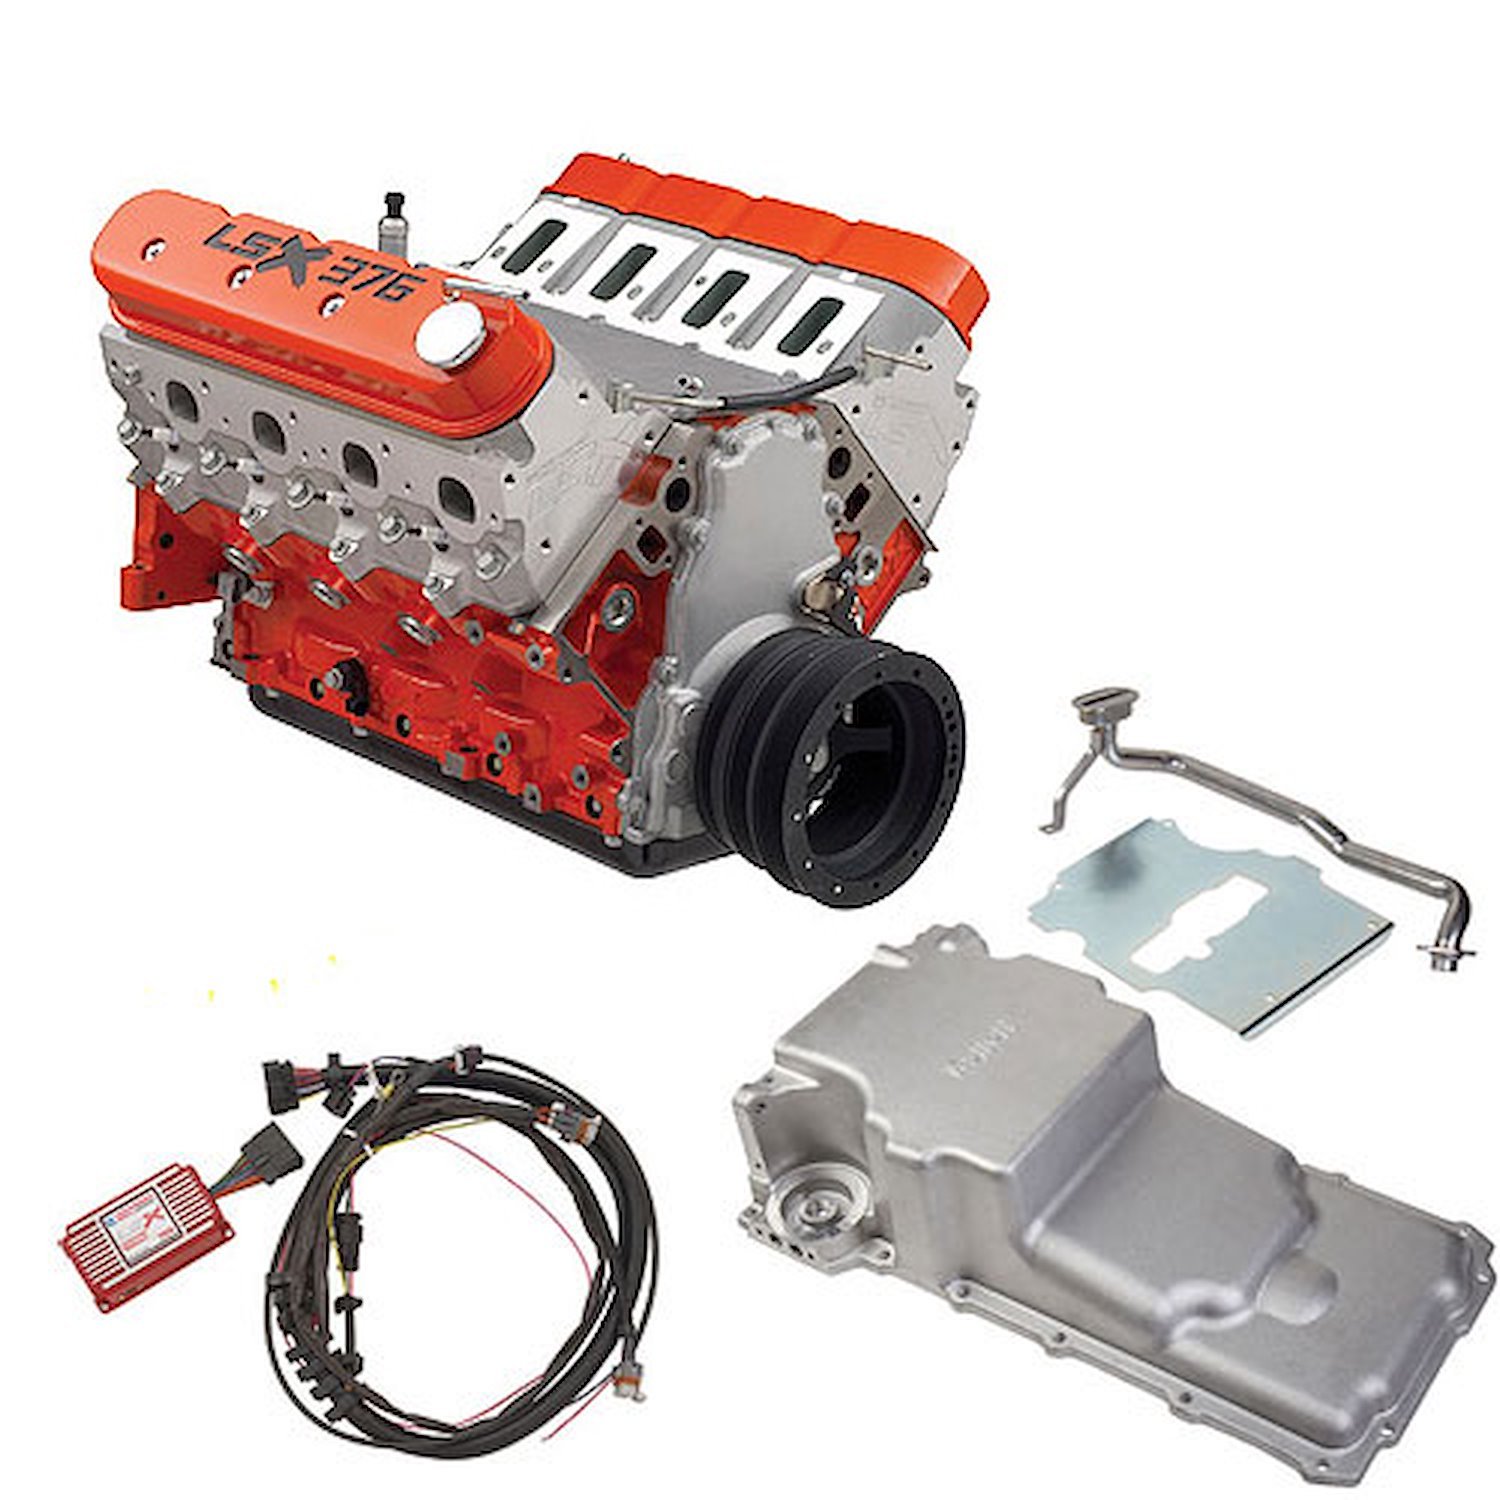 19417356 LSX376-B15 376ci Crate Engine Kit [Carbureted]